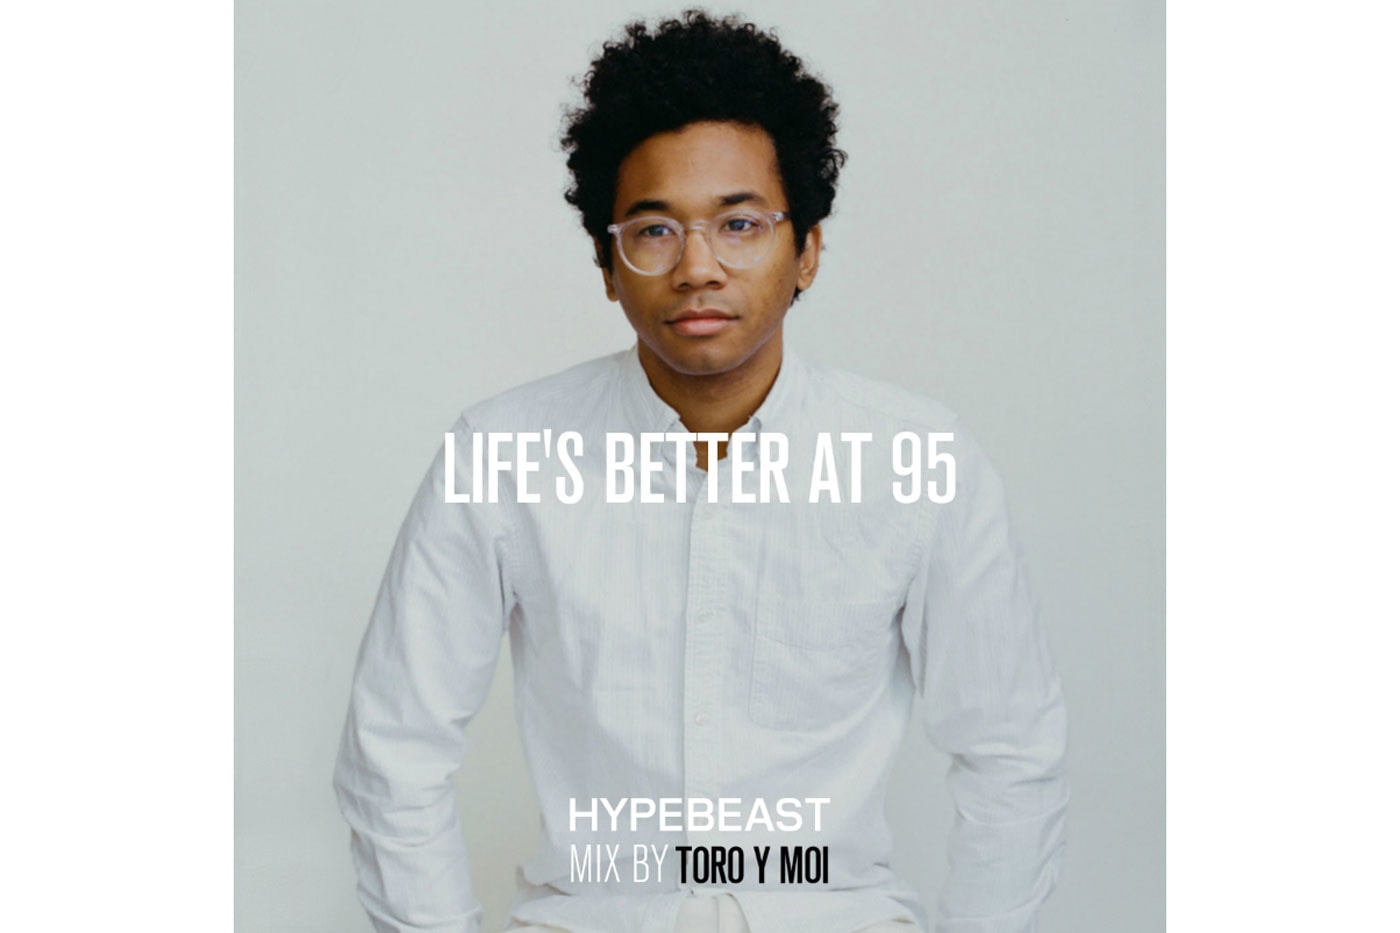 HYPEBEAST Mix Toro Y Moi Lifes Better at 95 Toro Y Moi 2016